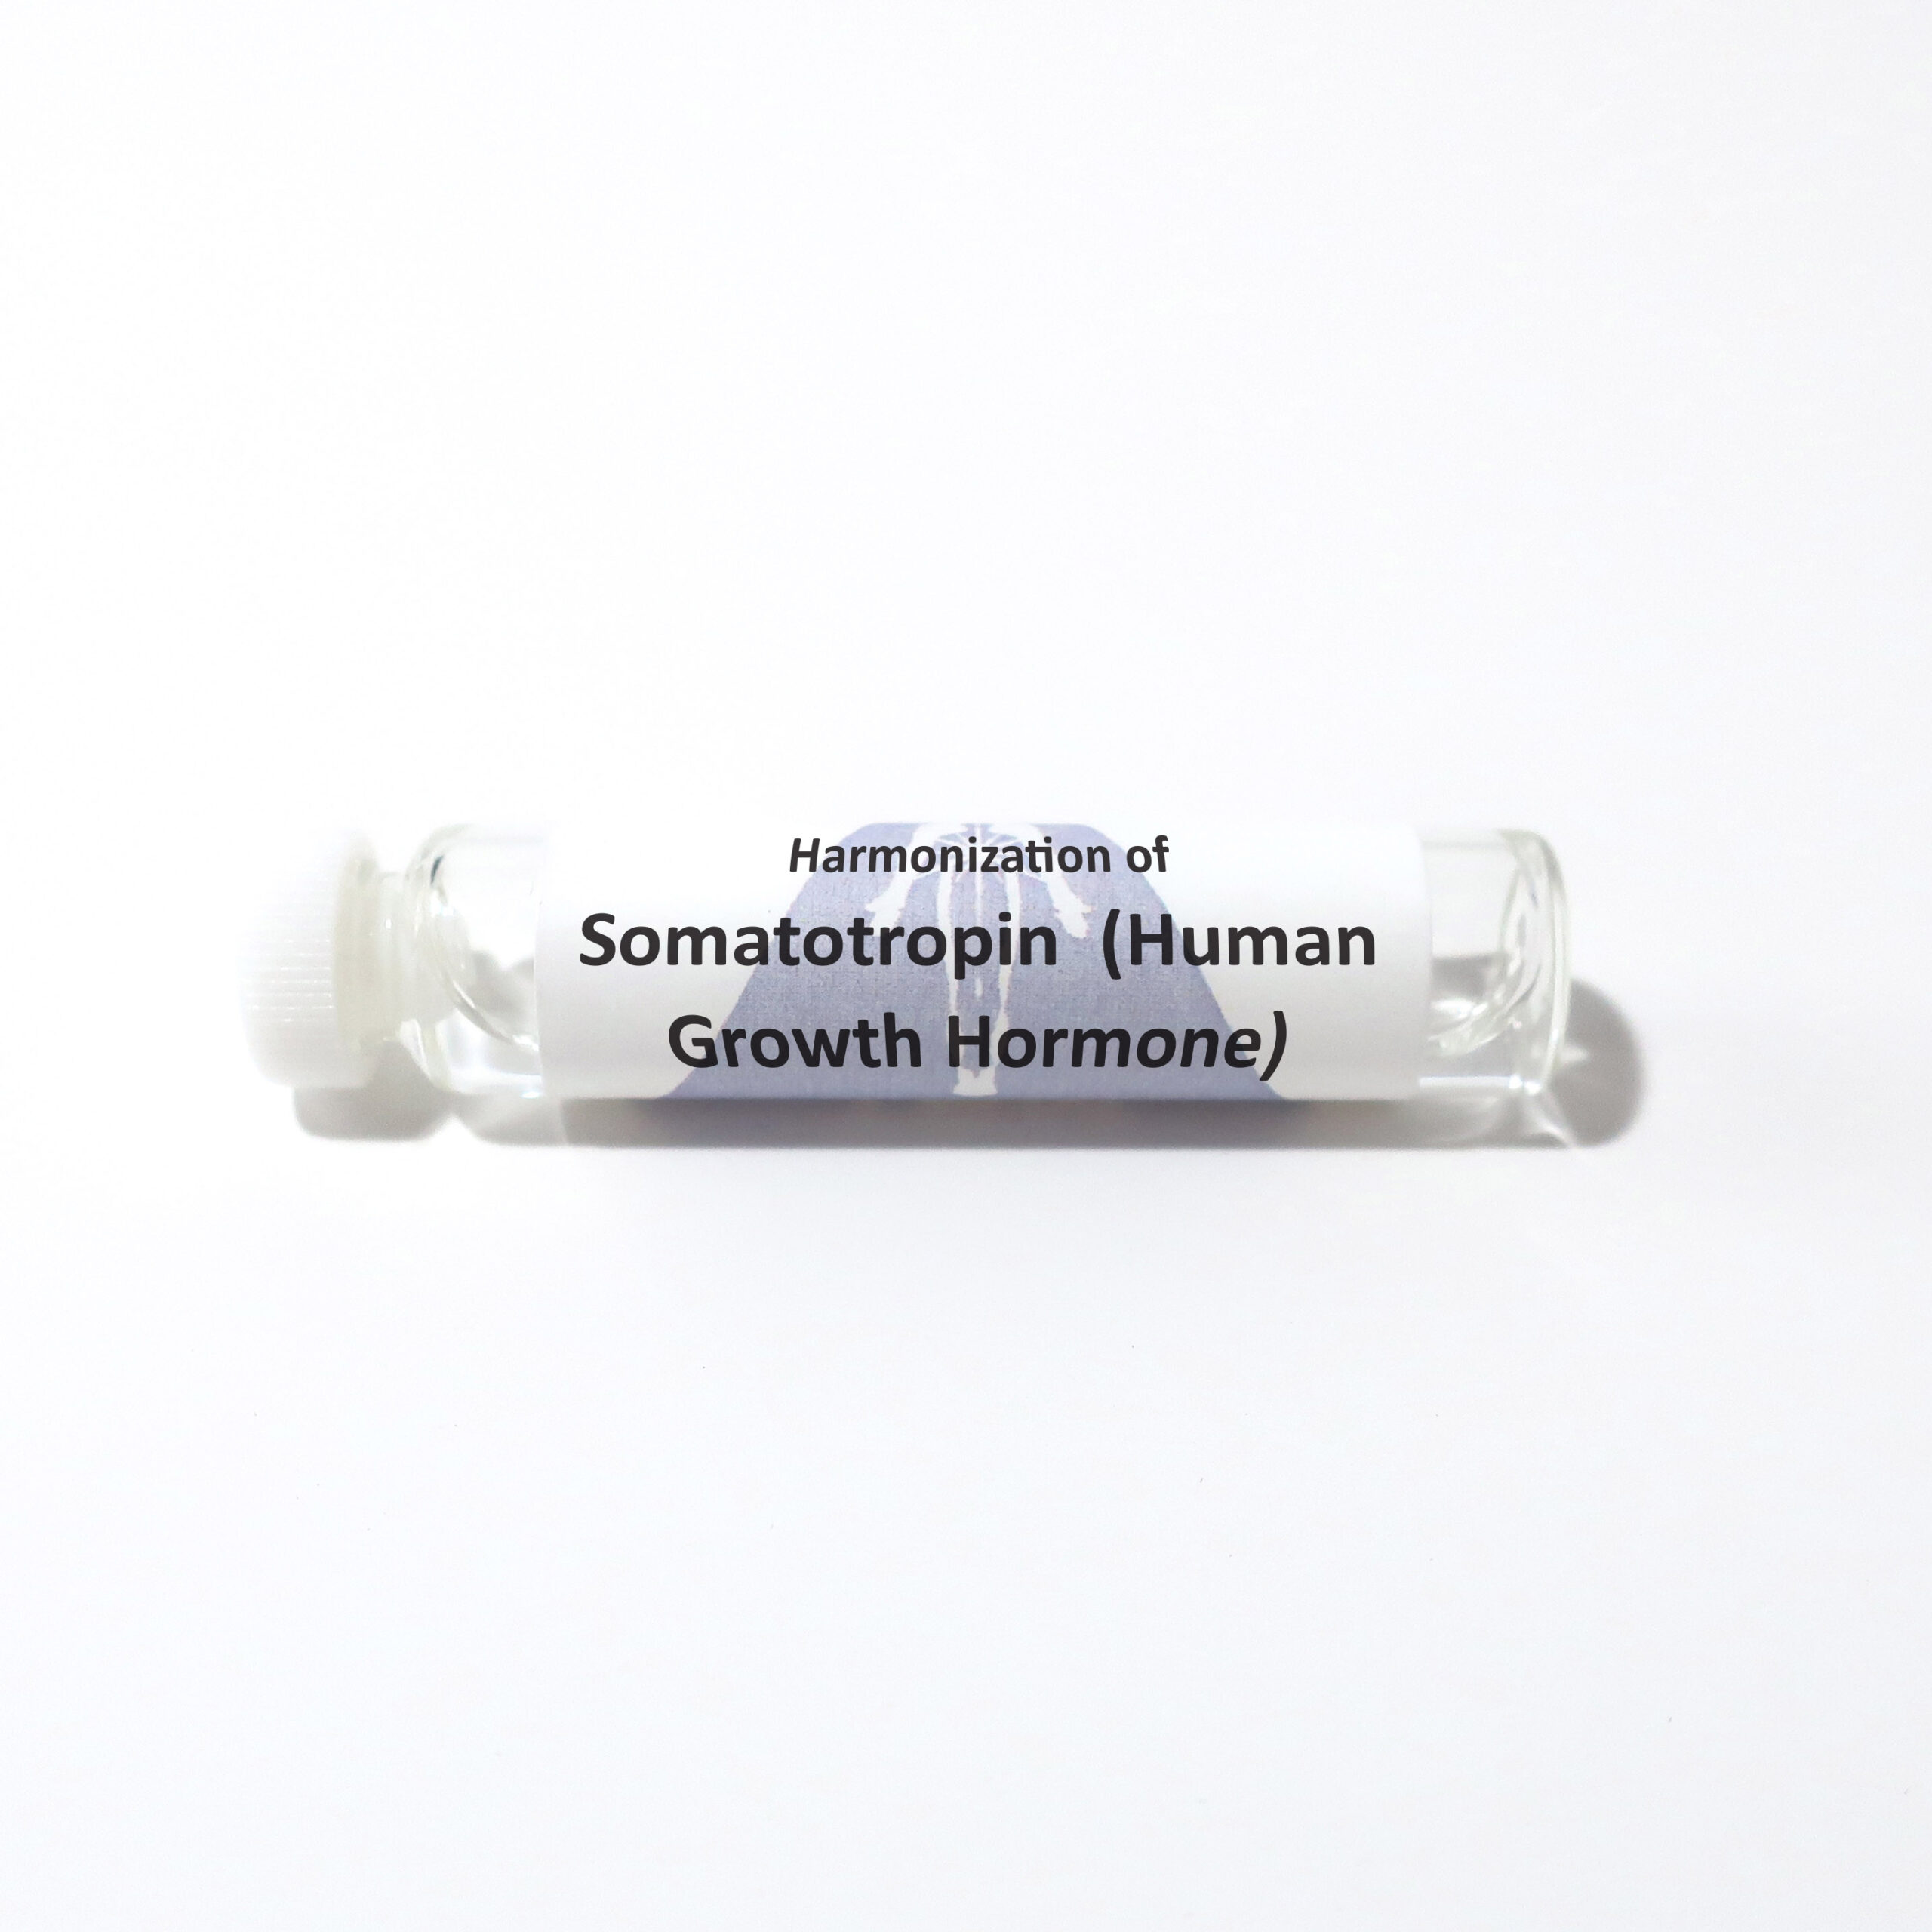 Somatotropin (Human Growth Hormone)